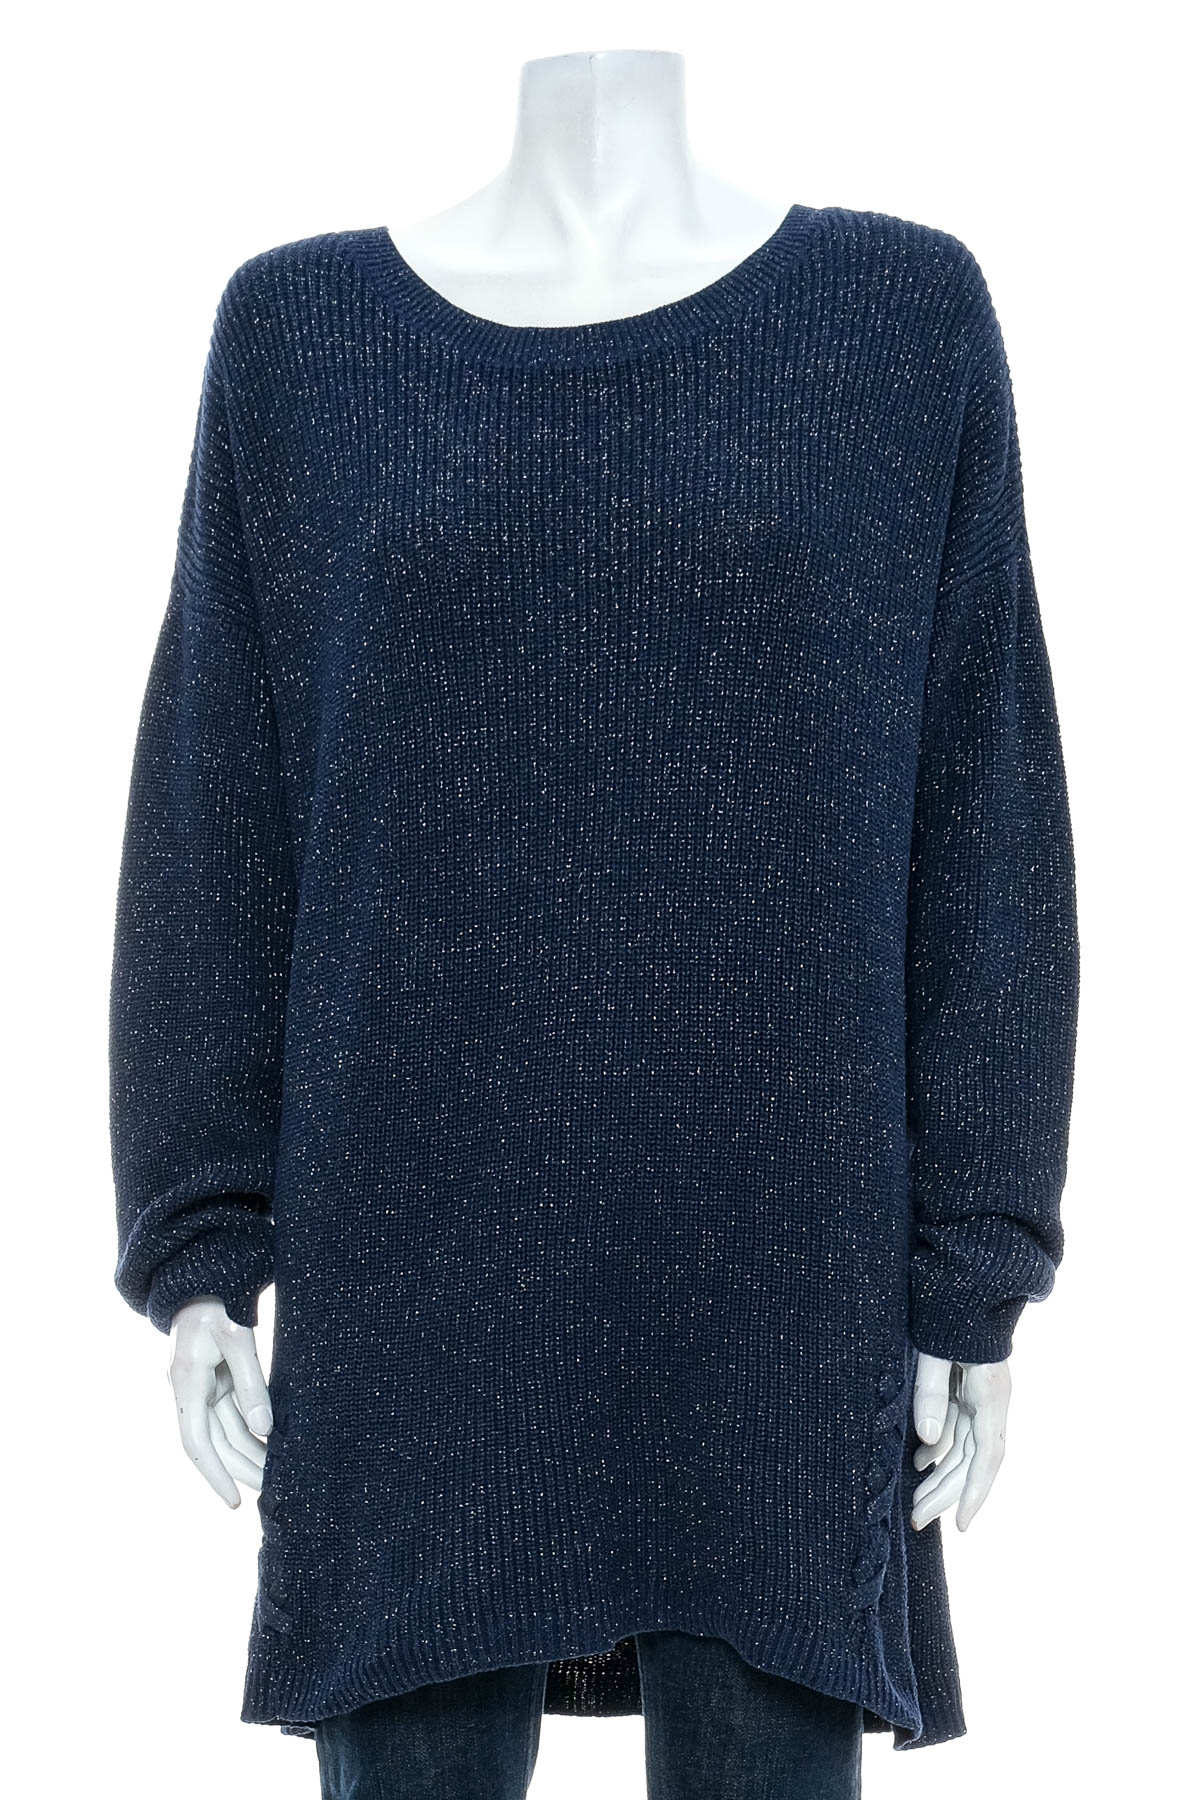 Women's sweater - A.n.a - 0